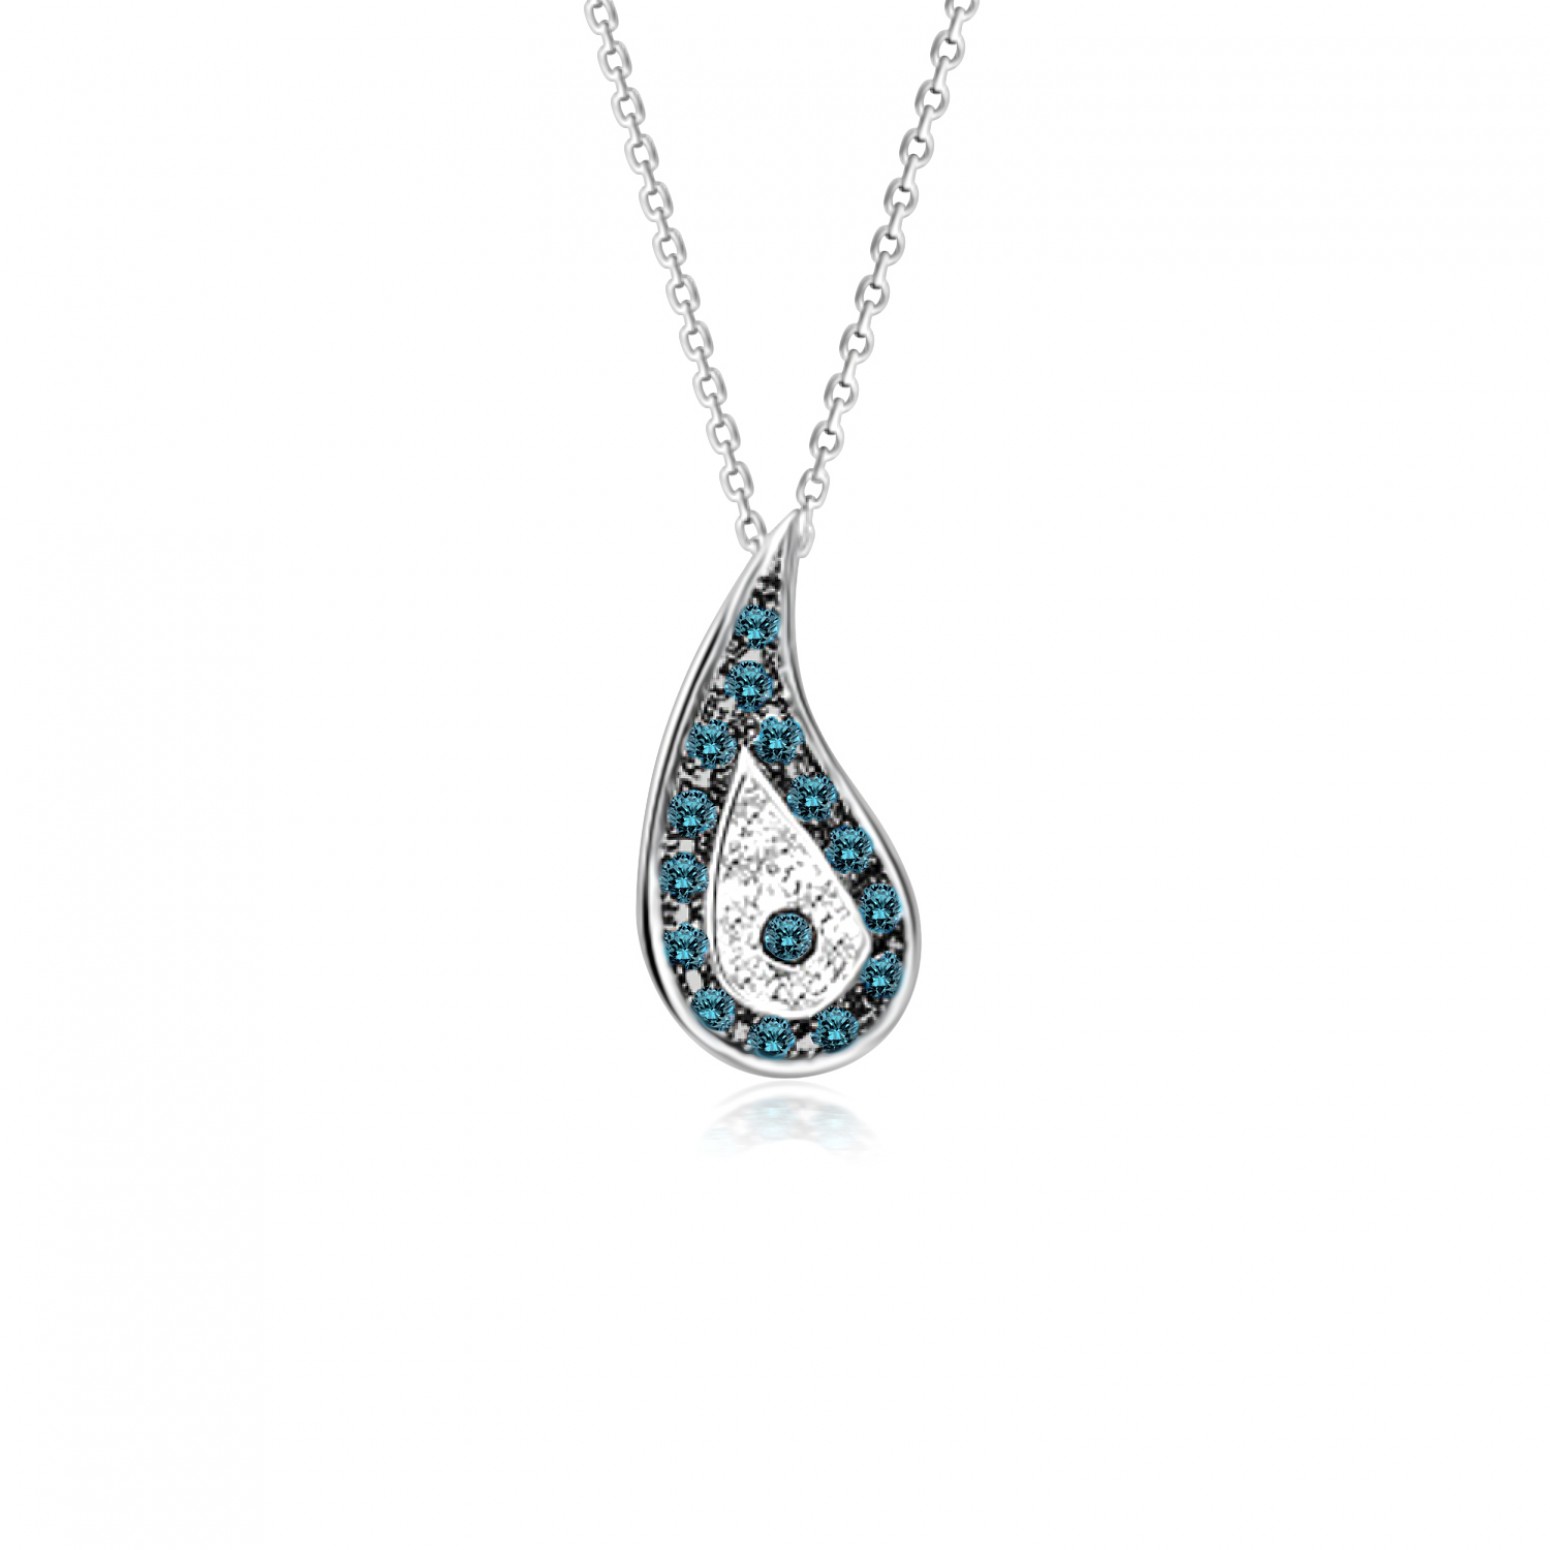 Eye necklace, Κ9 white gold with blue and white diamonds 0.48ct, VS1, G, ko5827 NECKLACES Κοσμηματα - chrilia.gr